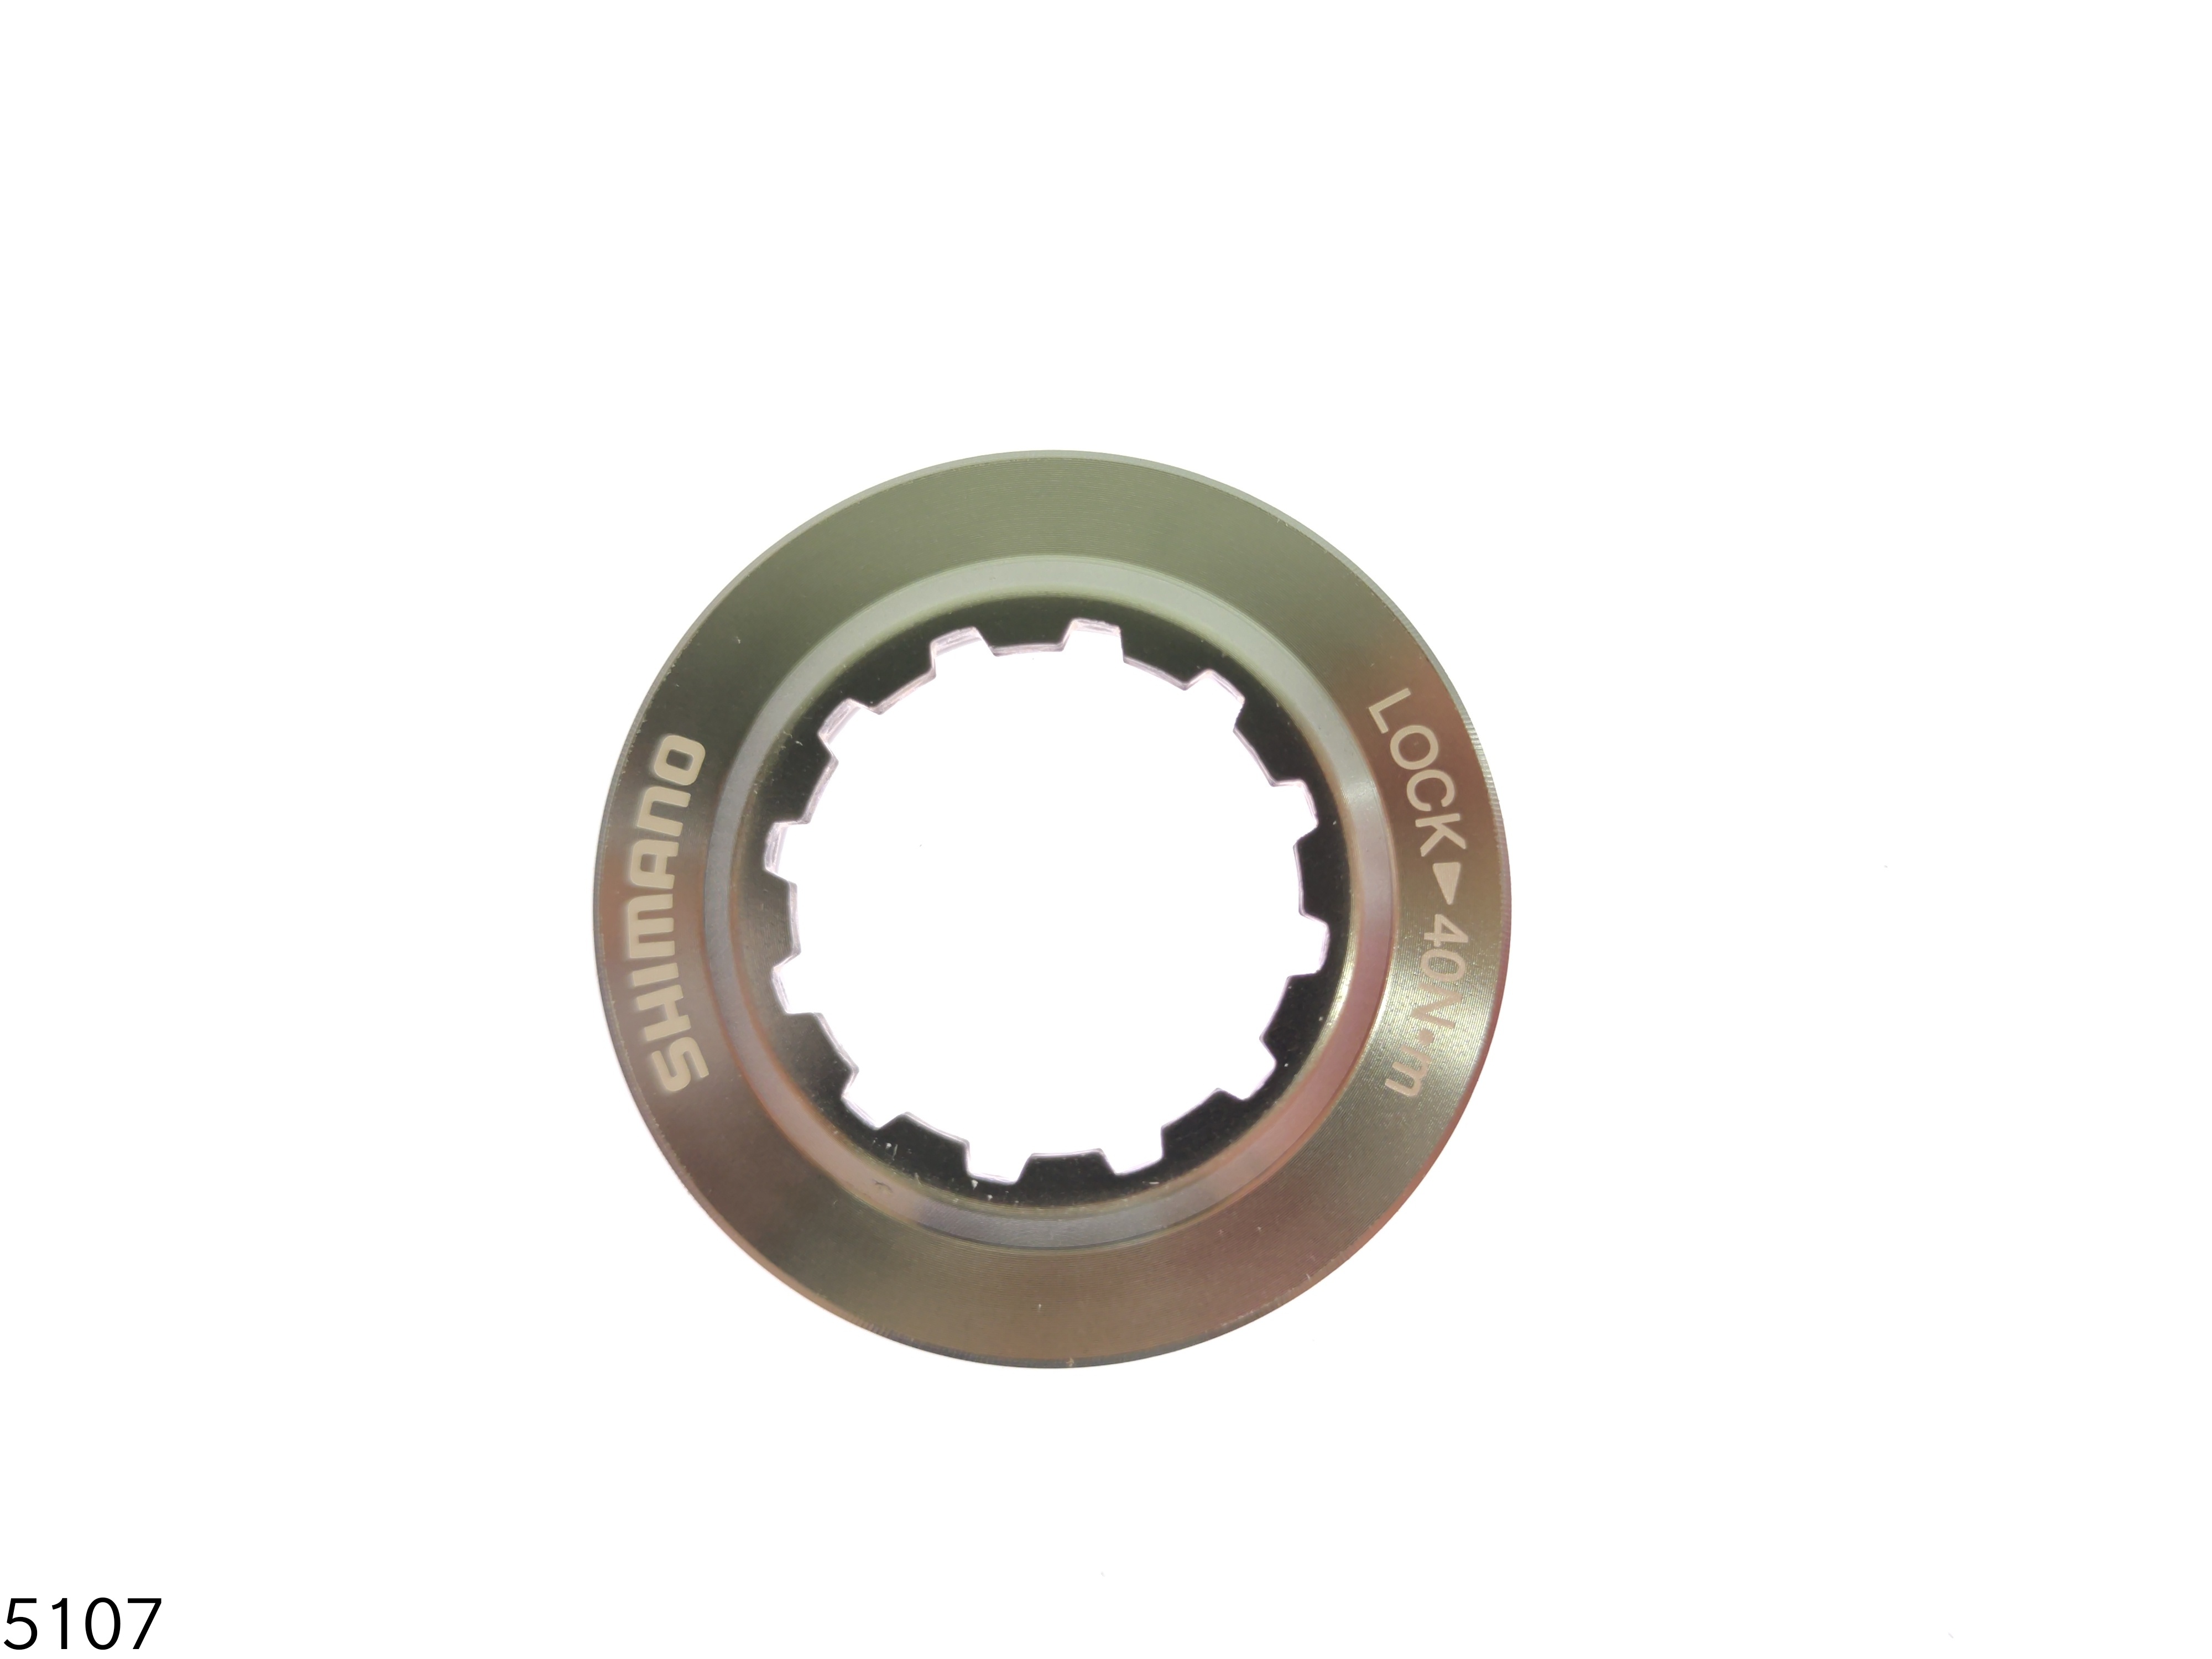 SHIMANO Centerlock lock ring for SM-RT900